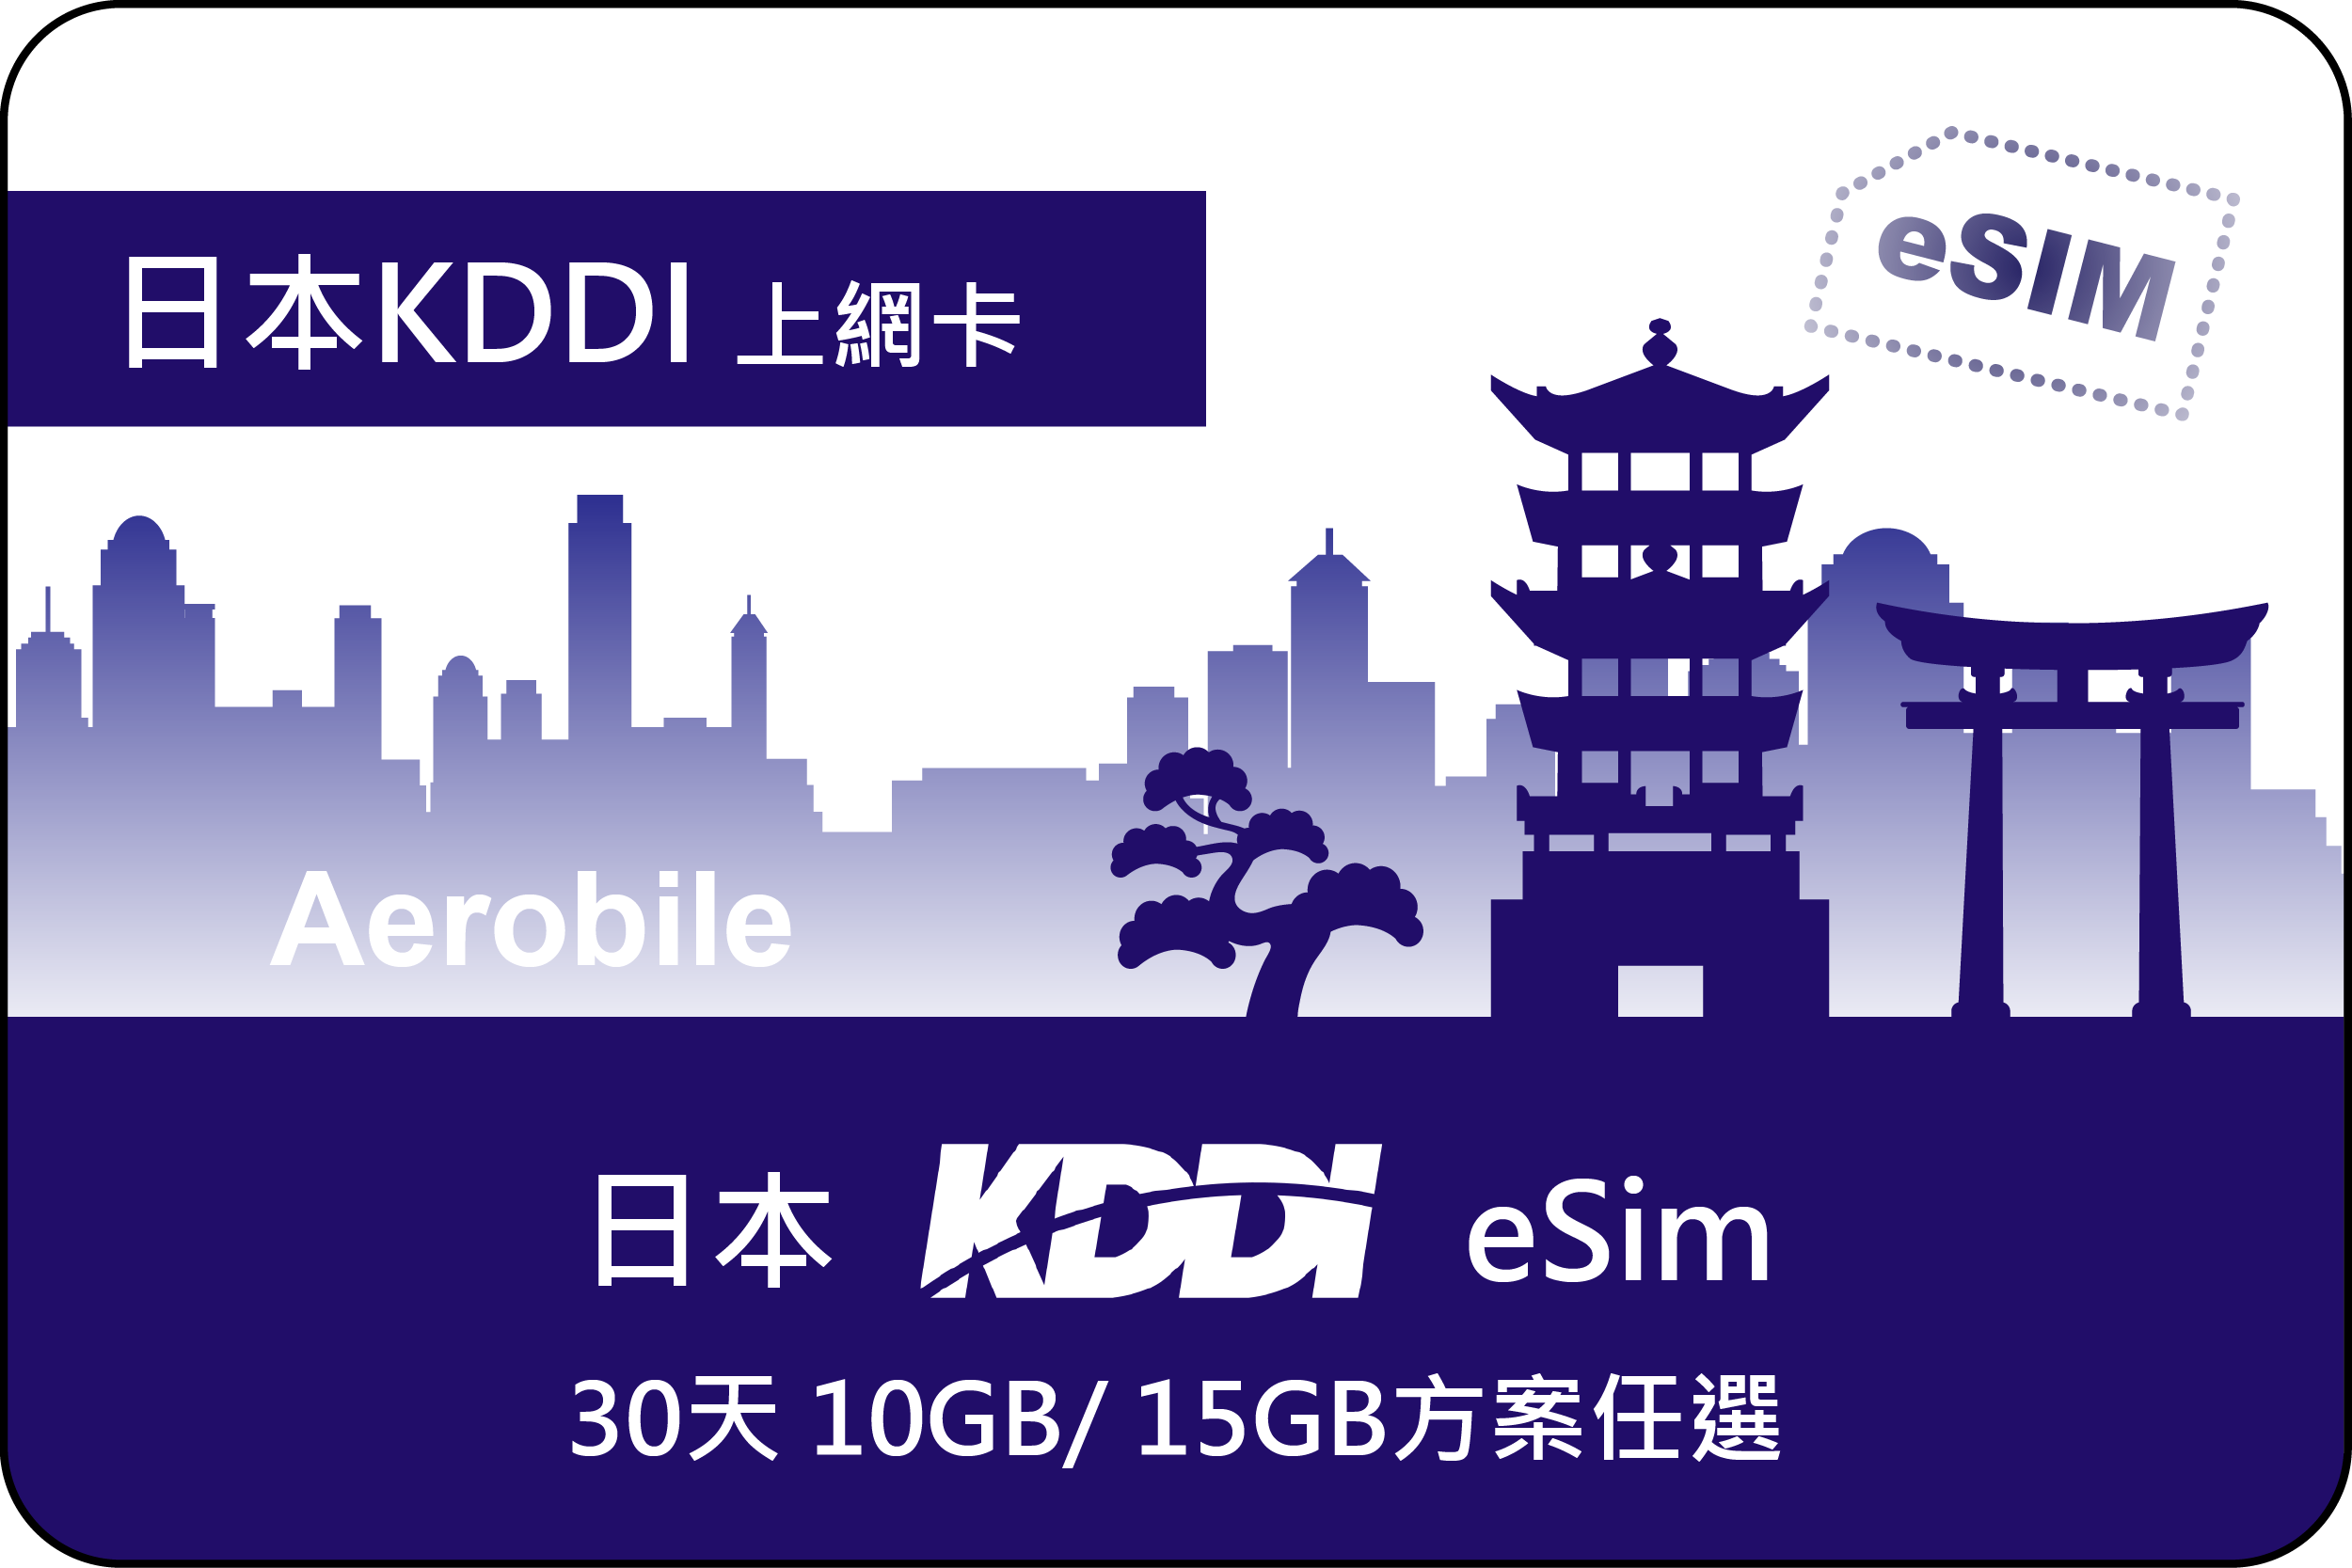 eSIM Japan KDDI 3GB/ 10GB/ 15GB/ 30GB plans (i)